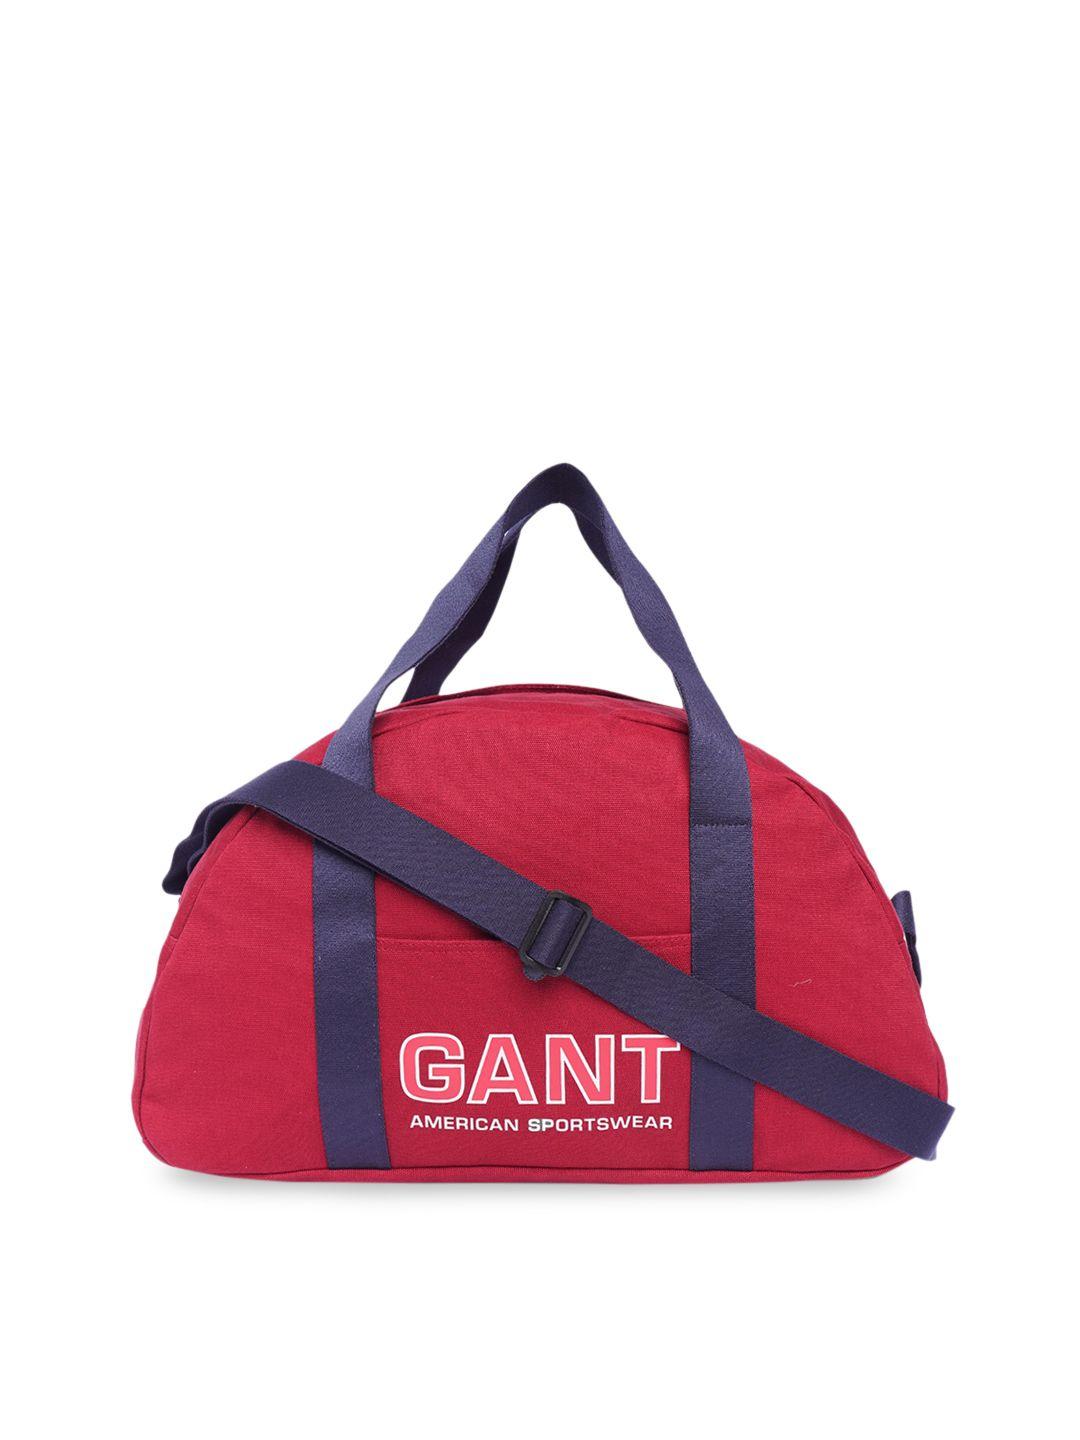 gant men red & navy blue printed duffle bag